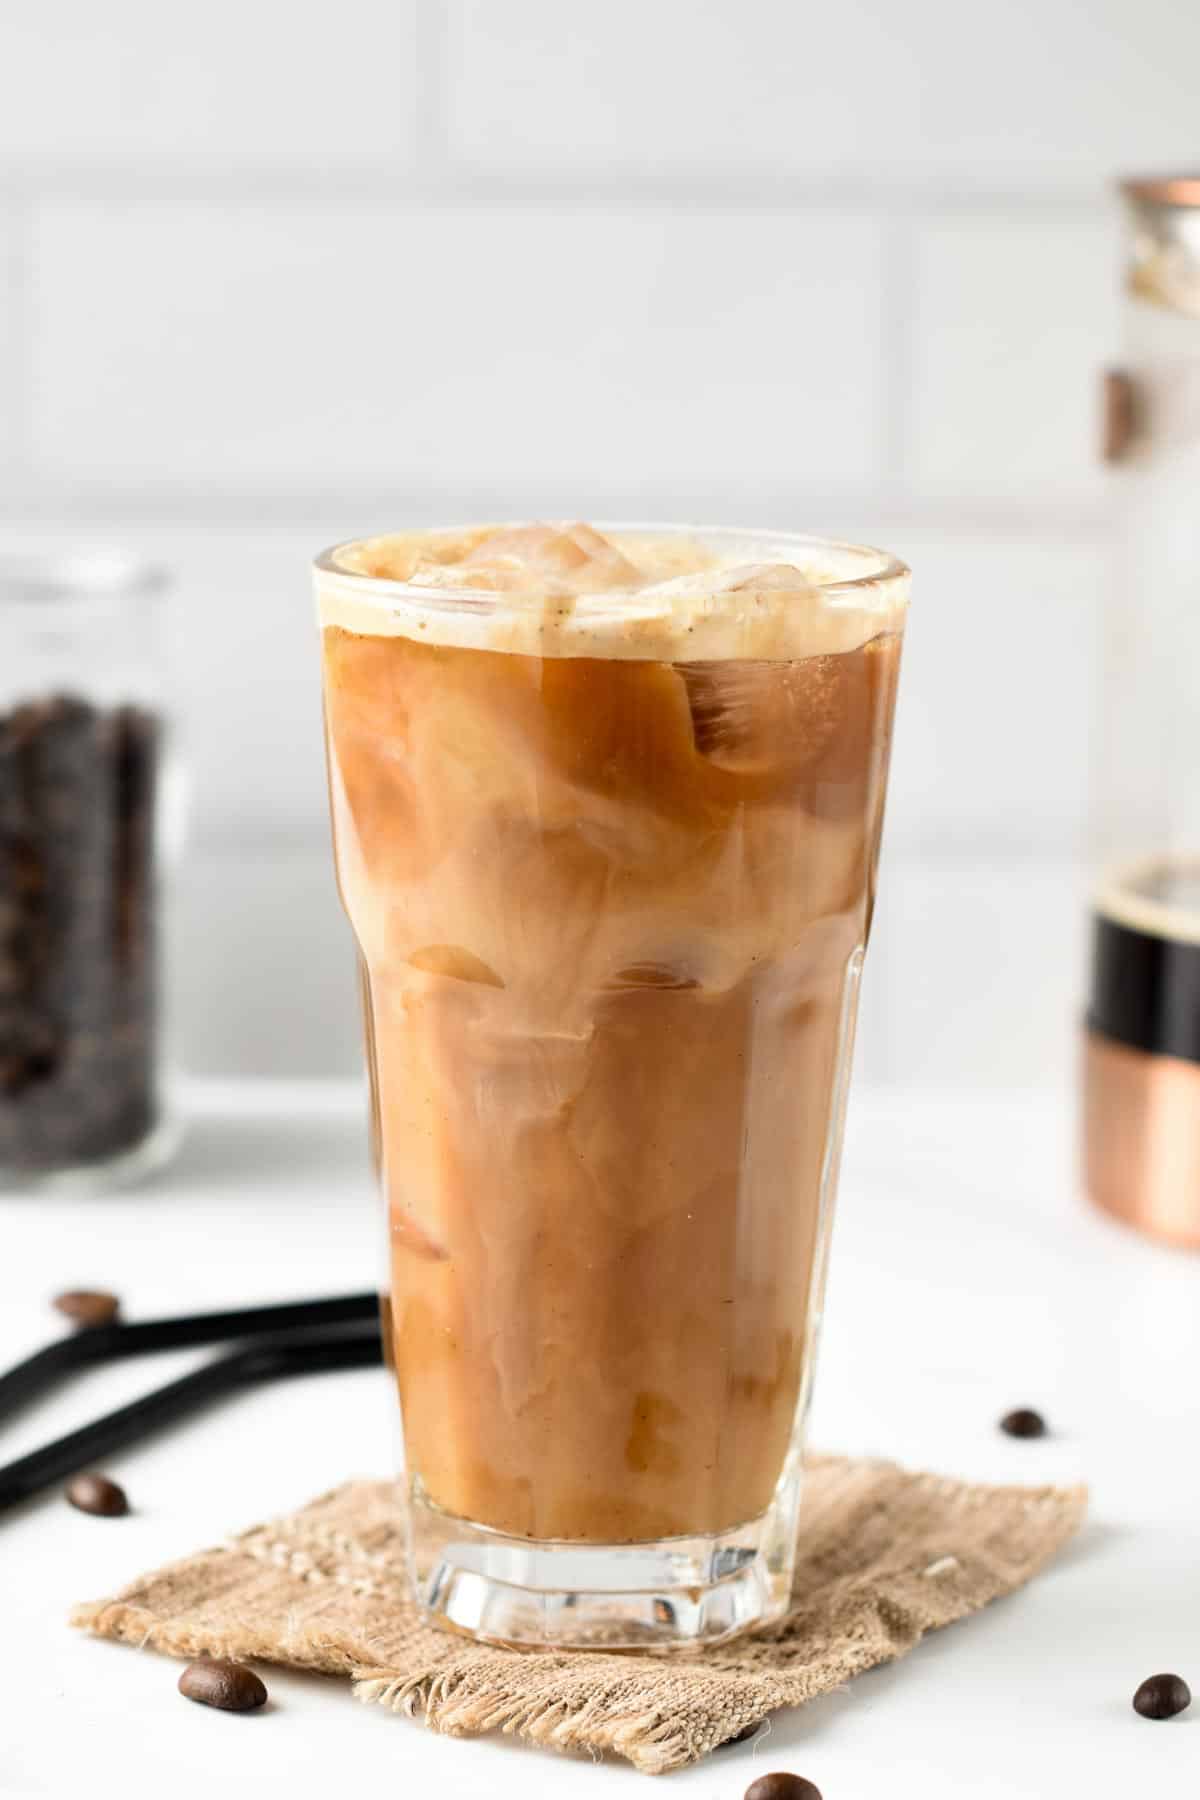 https://www.sweetashoney.co/wp-content/uploads/How-to-make-Iced-Coffee-1.jpg